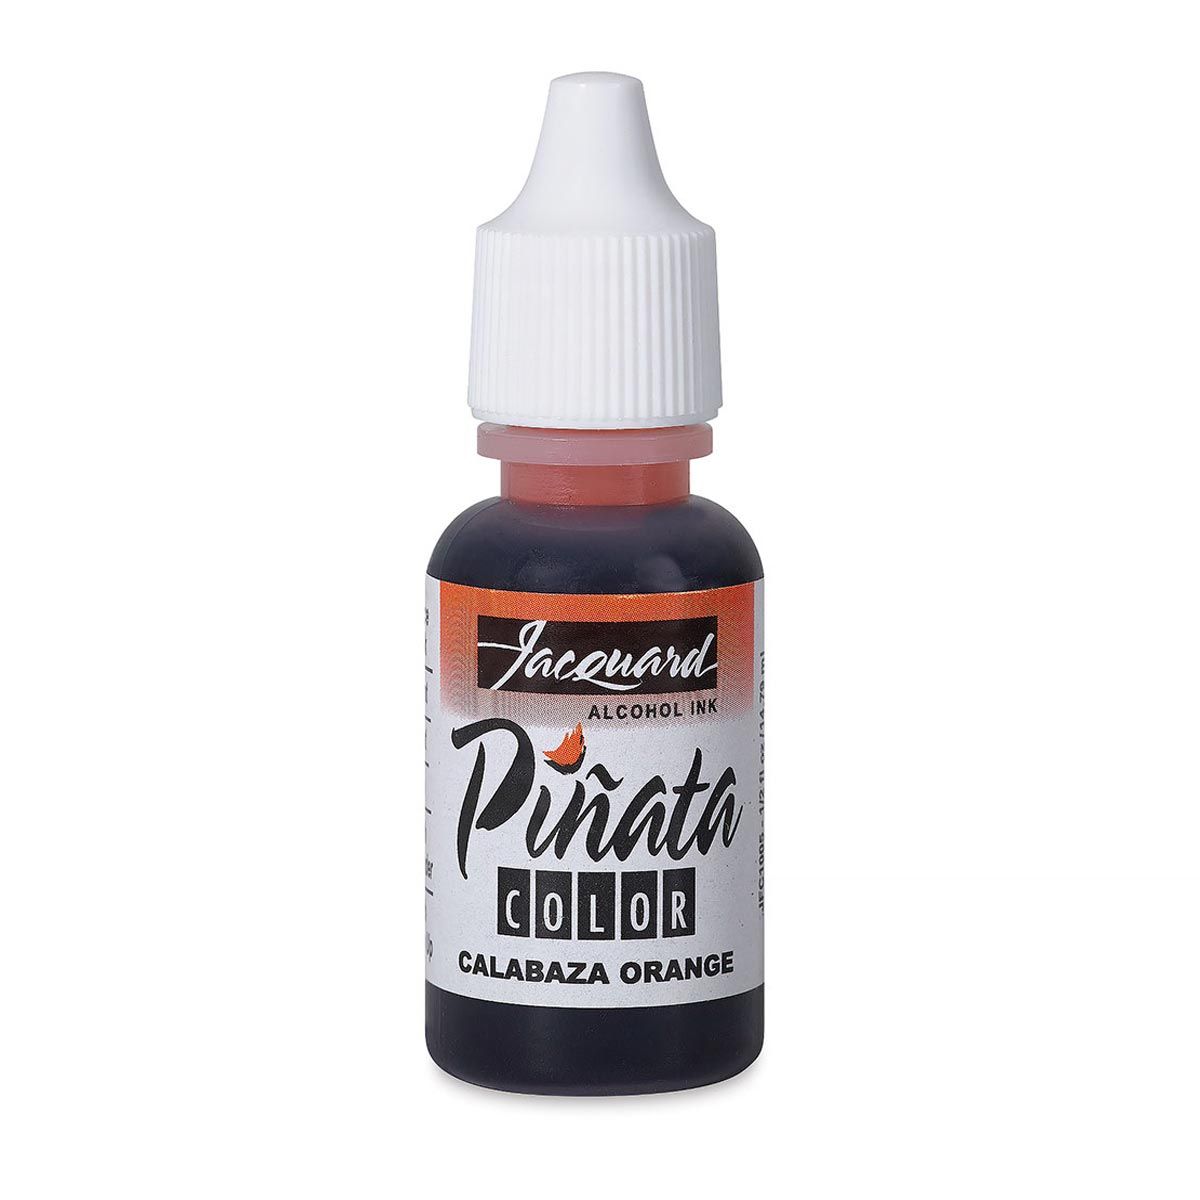 Pinata Color Alcohol Ink - Calabaza Orange 0.5-ounce